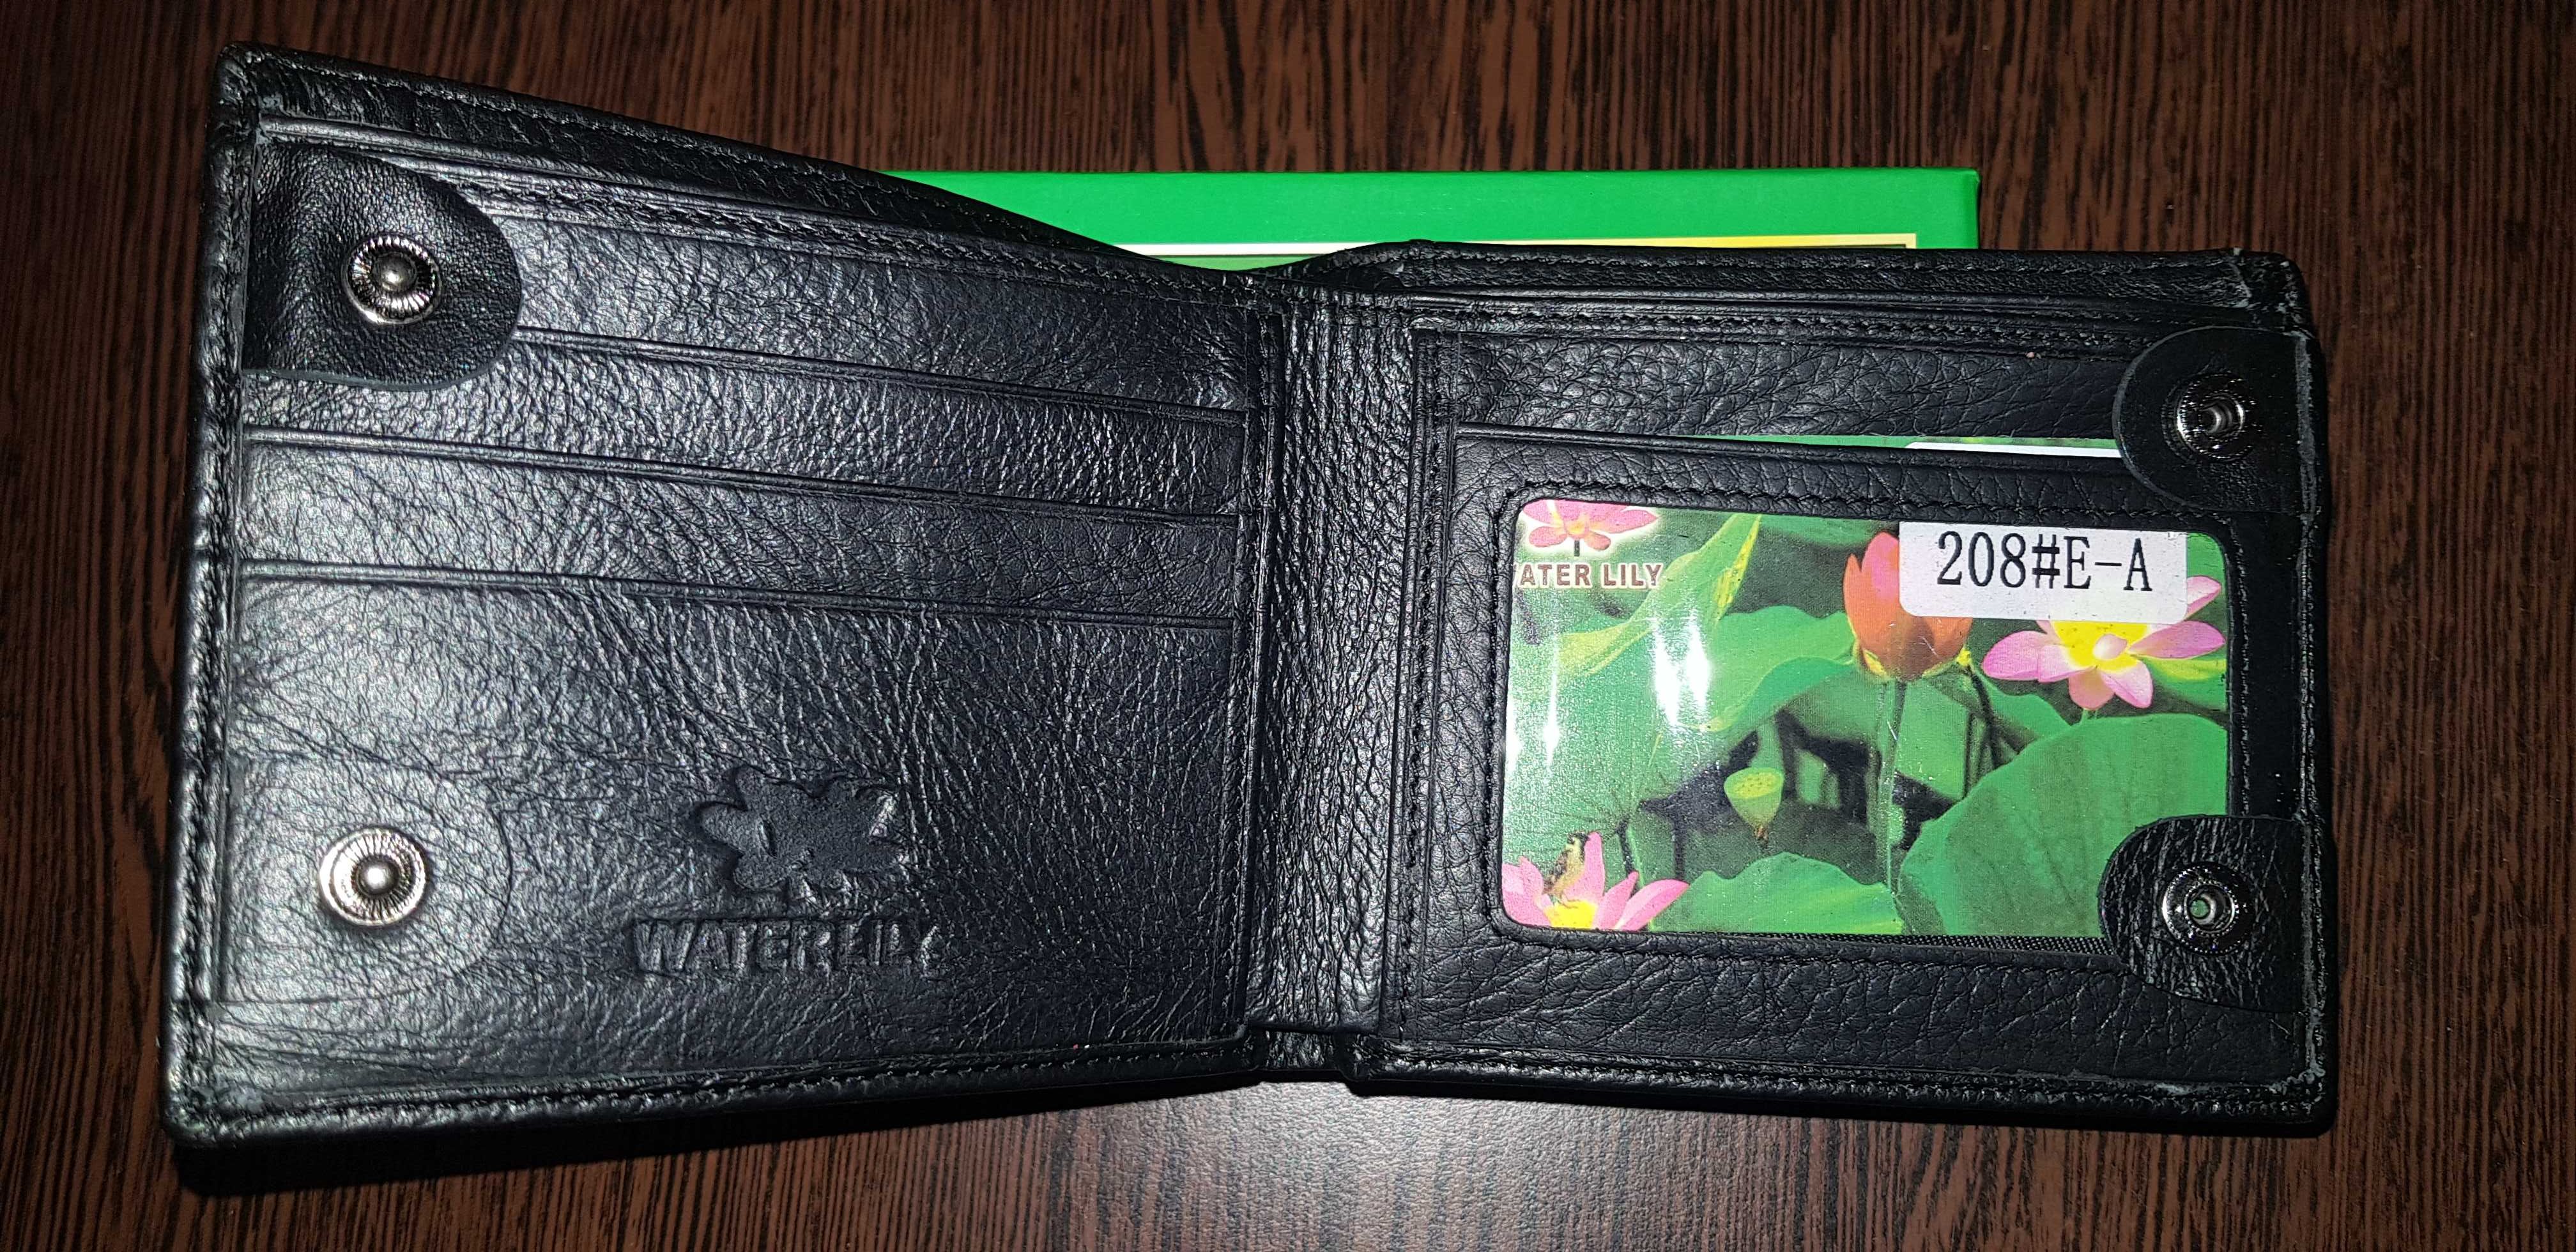 Бумажник кошелек портмоне Water Lily кожа на подарок любимому мужчине